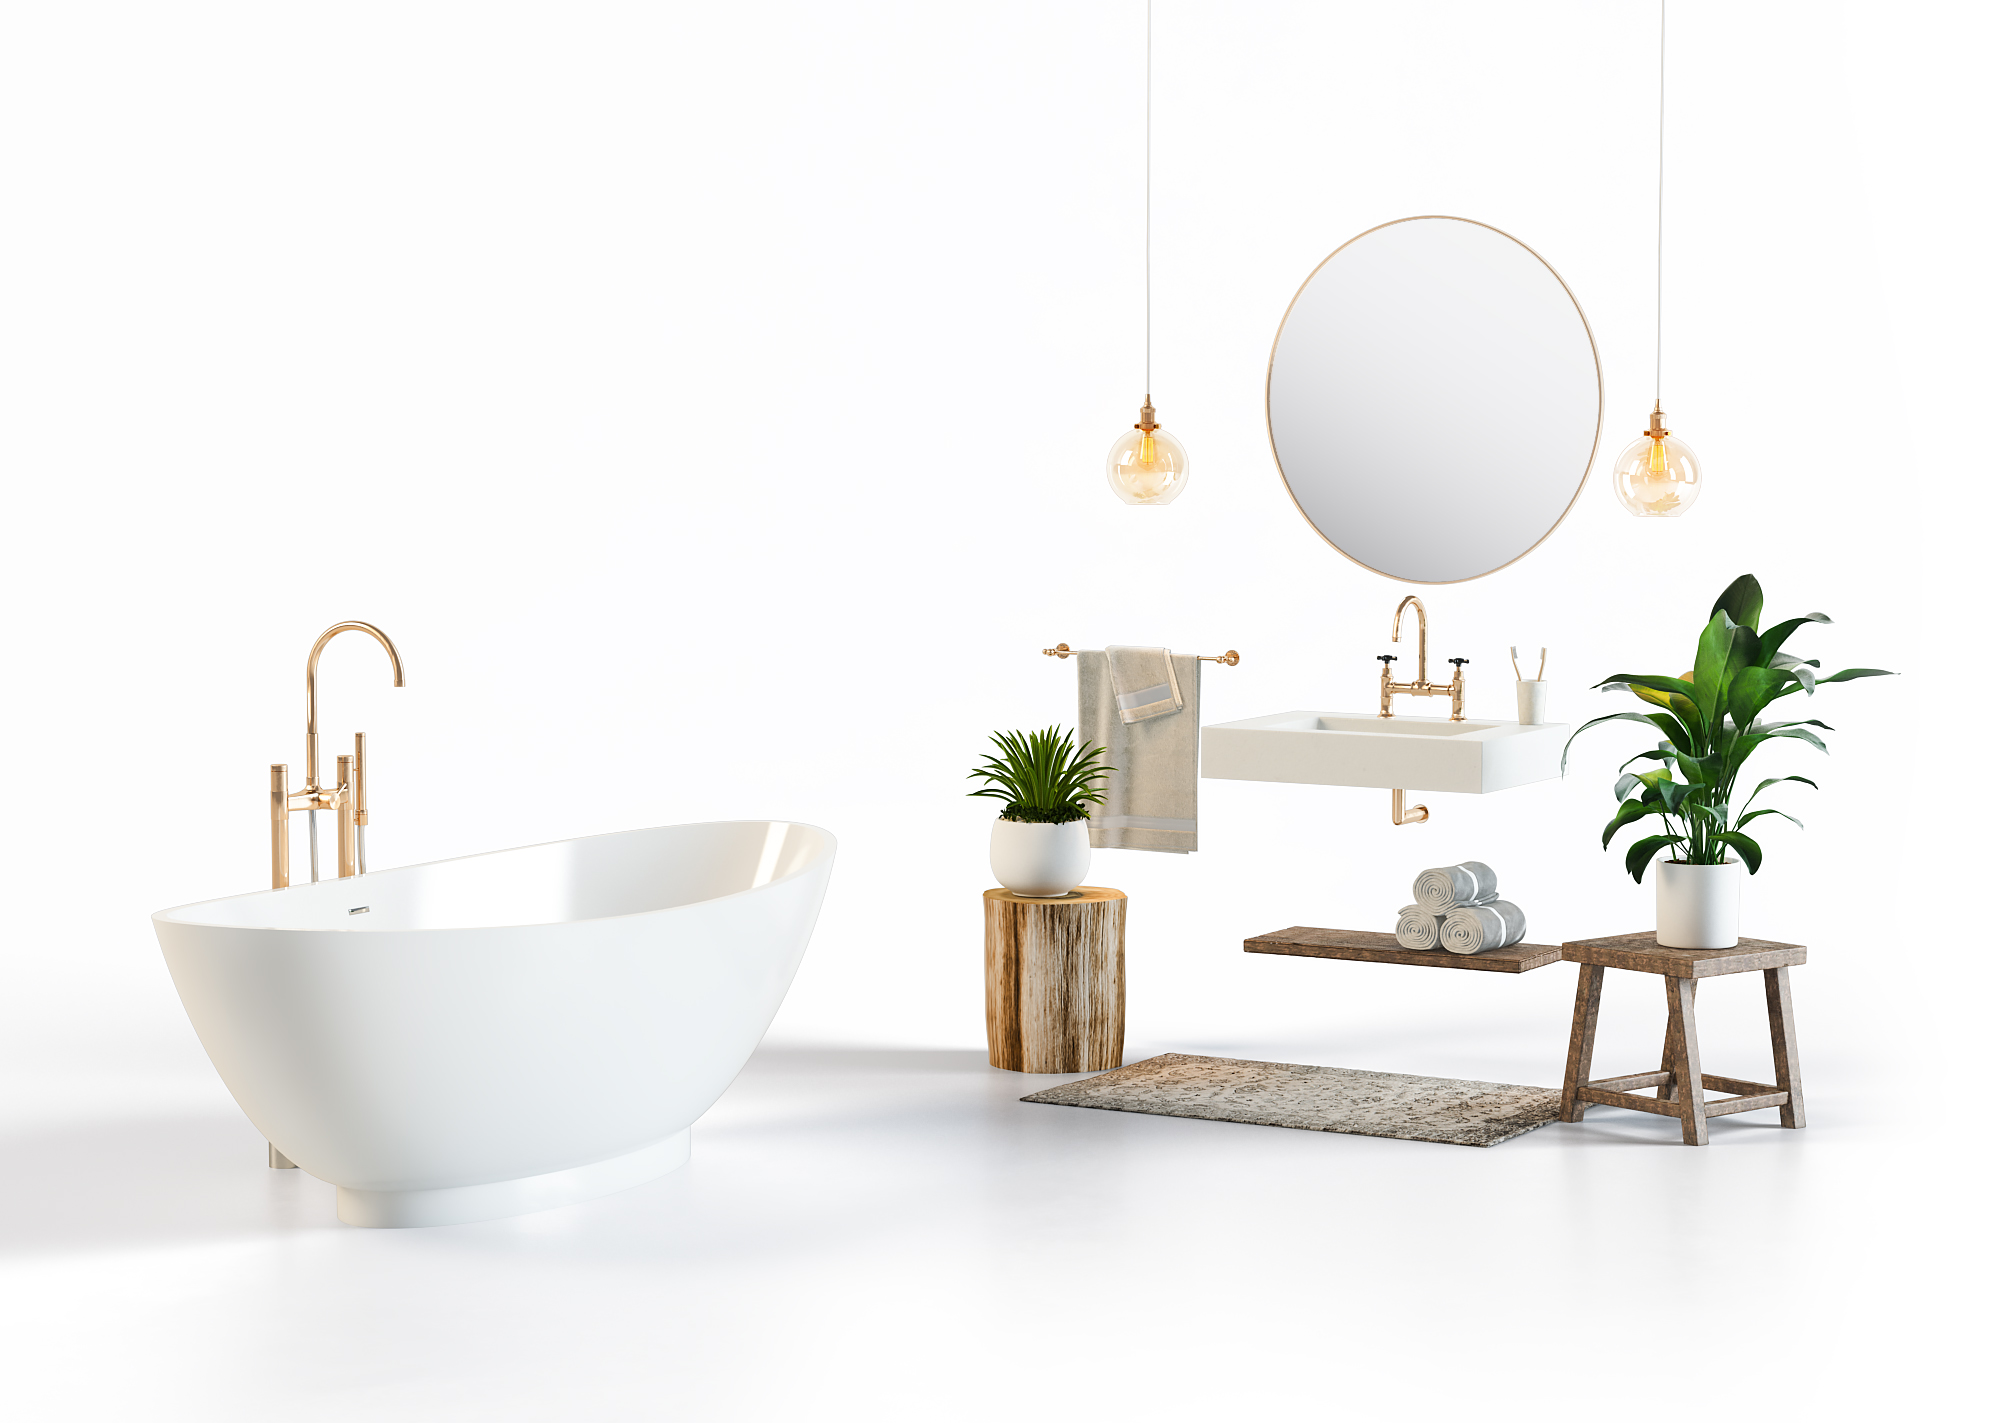 Commercial image 3D rendering bathroom